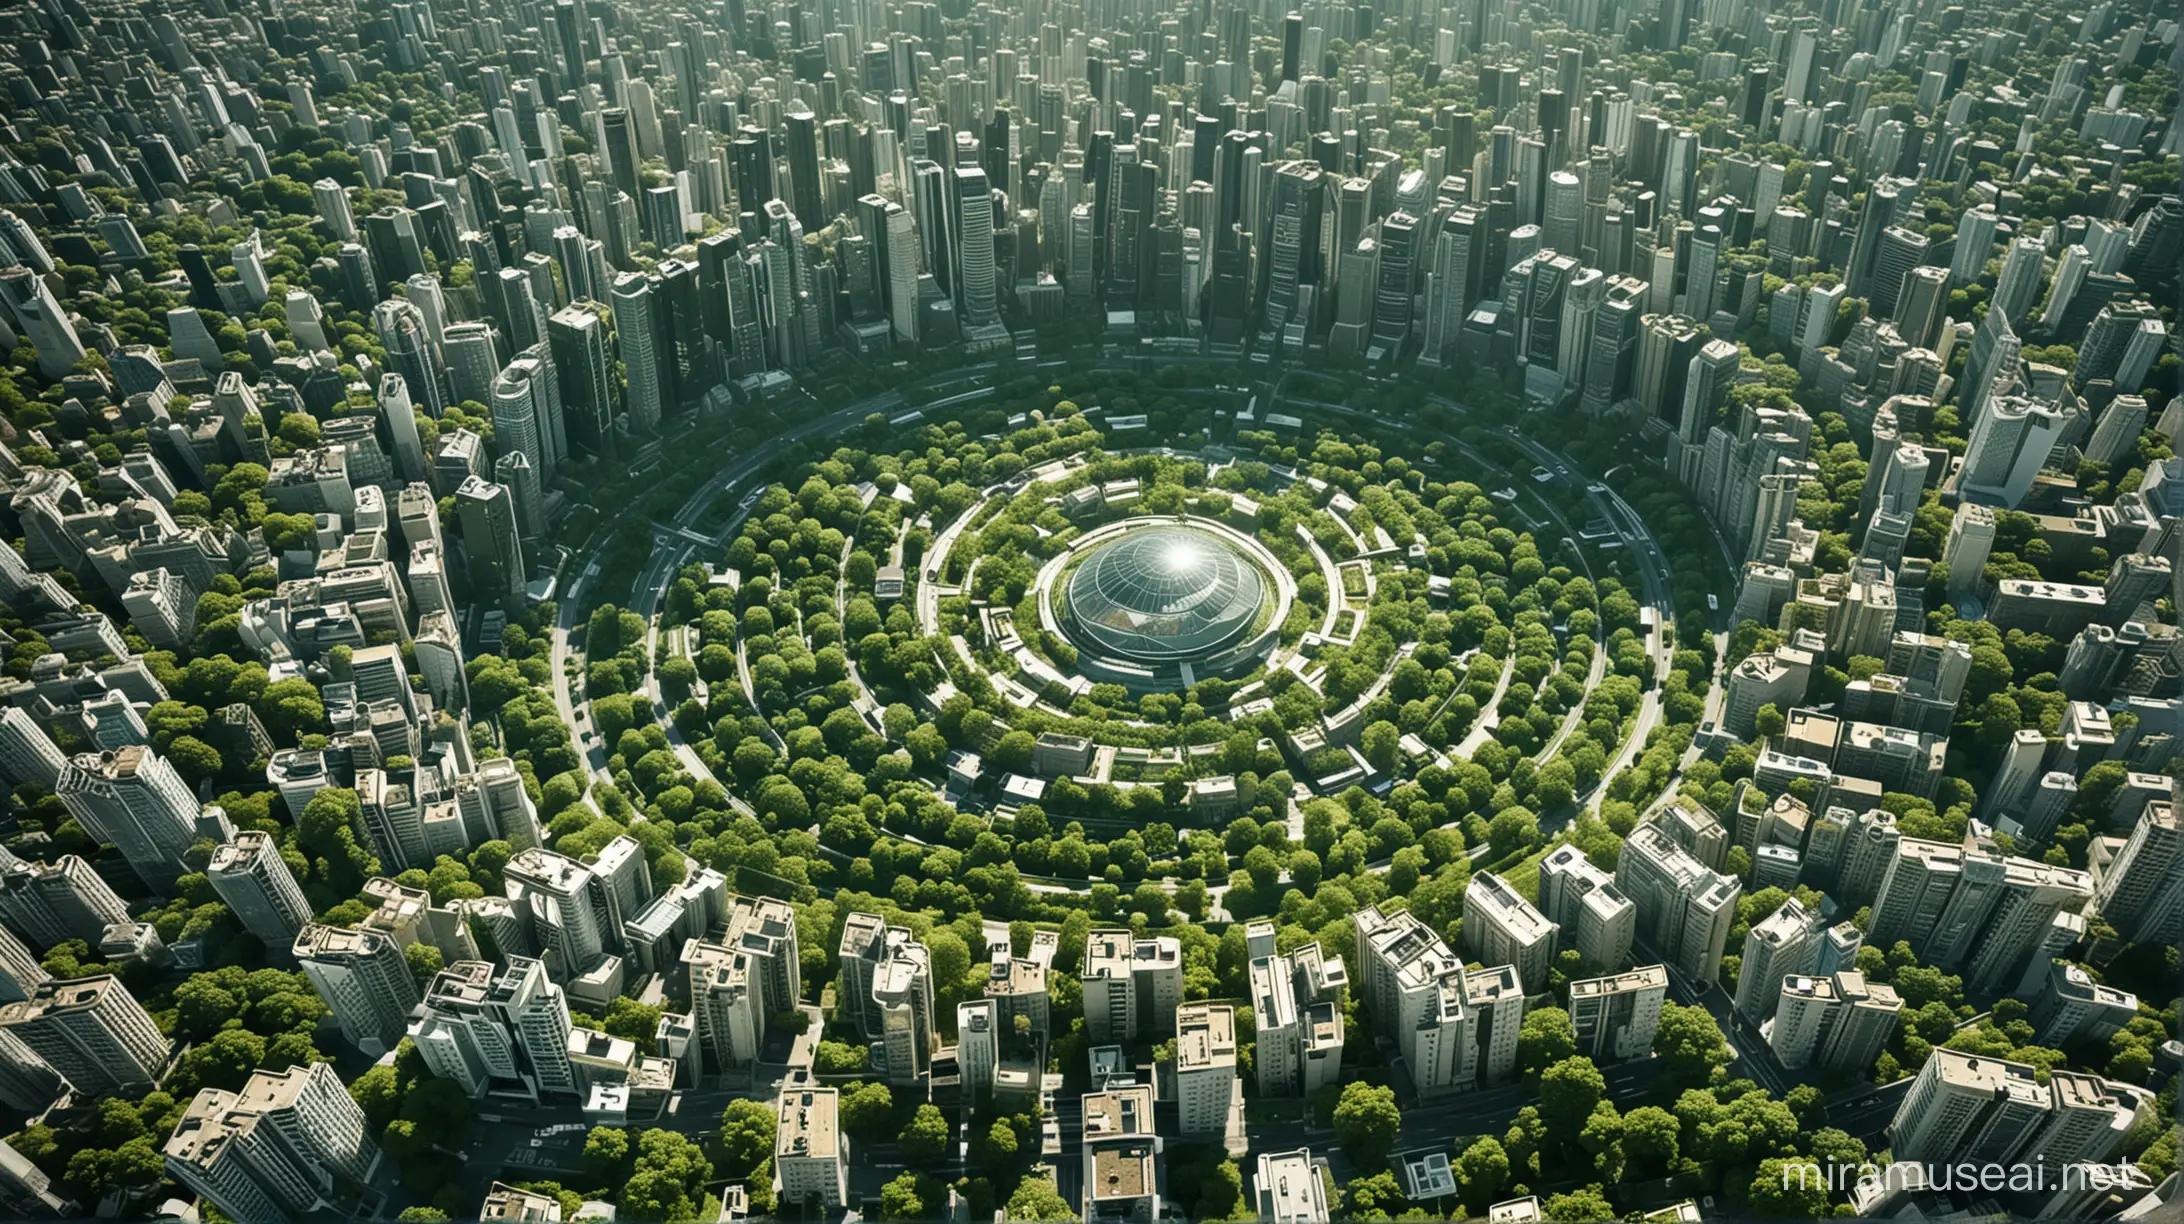 beautiful, green, utopian, city, futuristic, looking down, circular